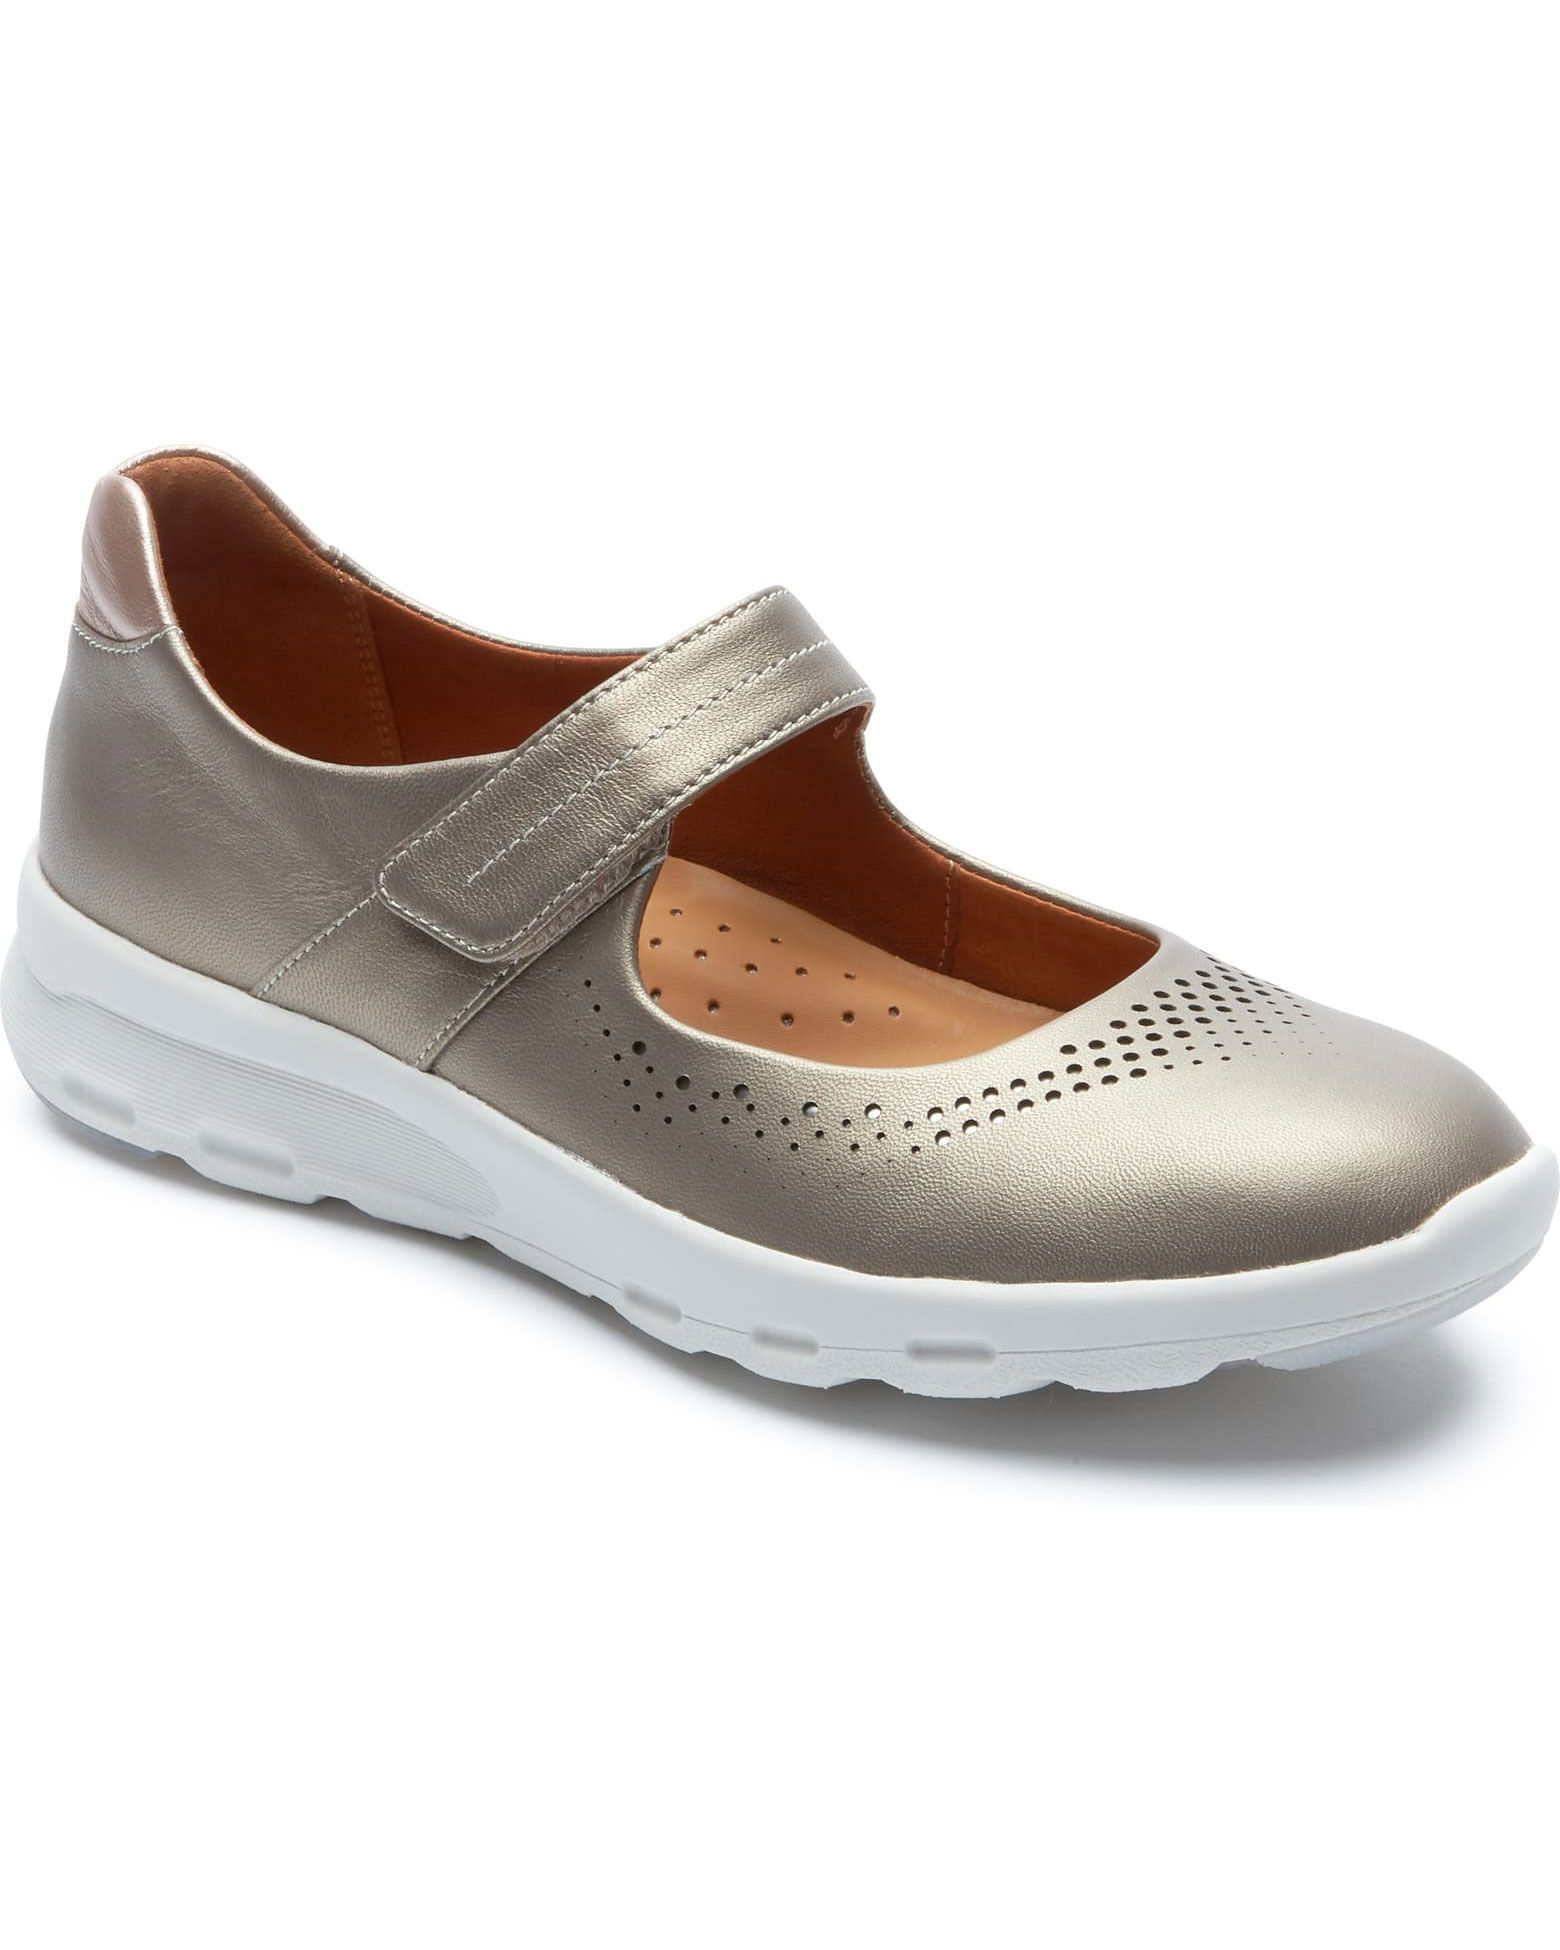 Rockport Mary Jane Walking Shoe: Τα καλύτερα παπούτσια για περπάτημα για γυναίκες